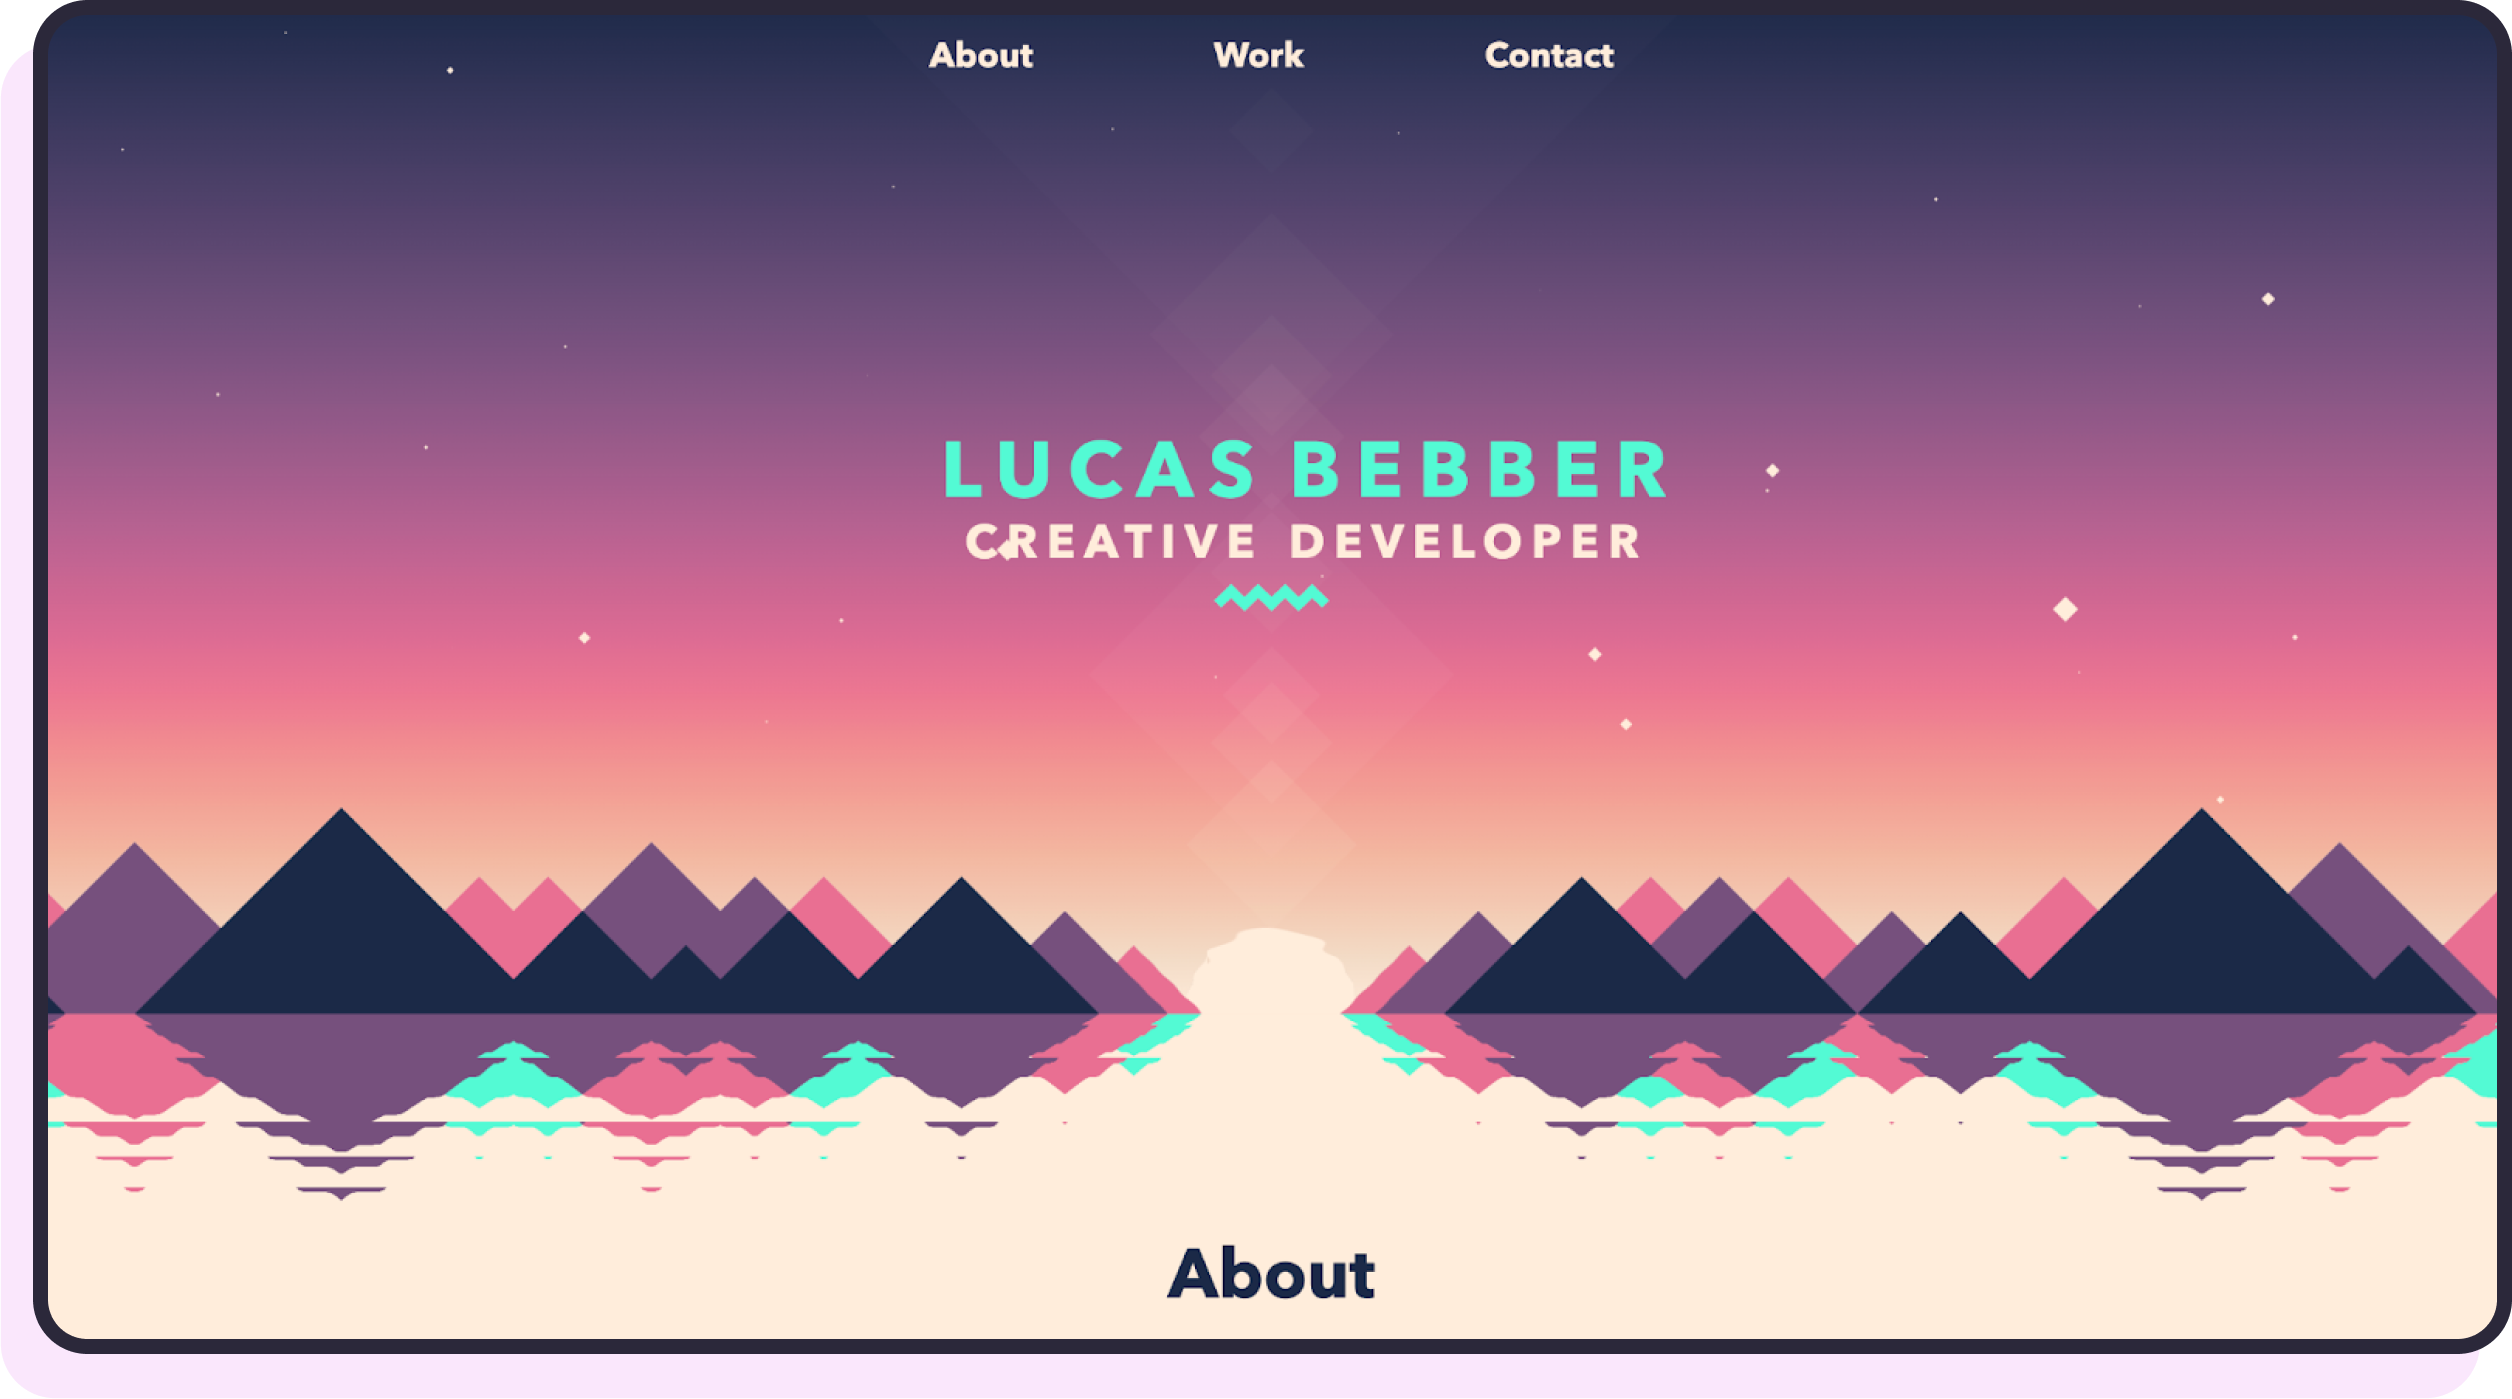 Lucas' portfolio homepage